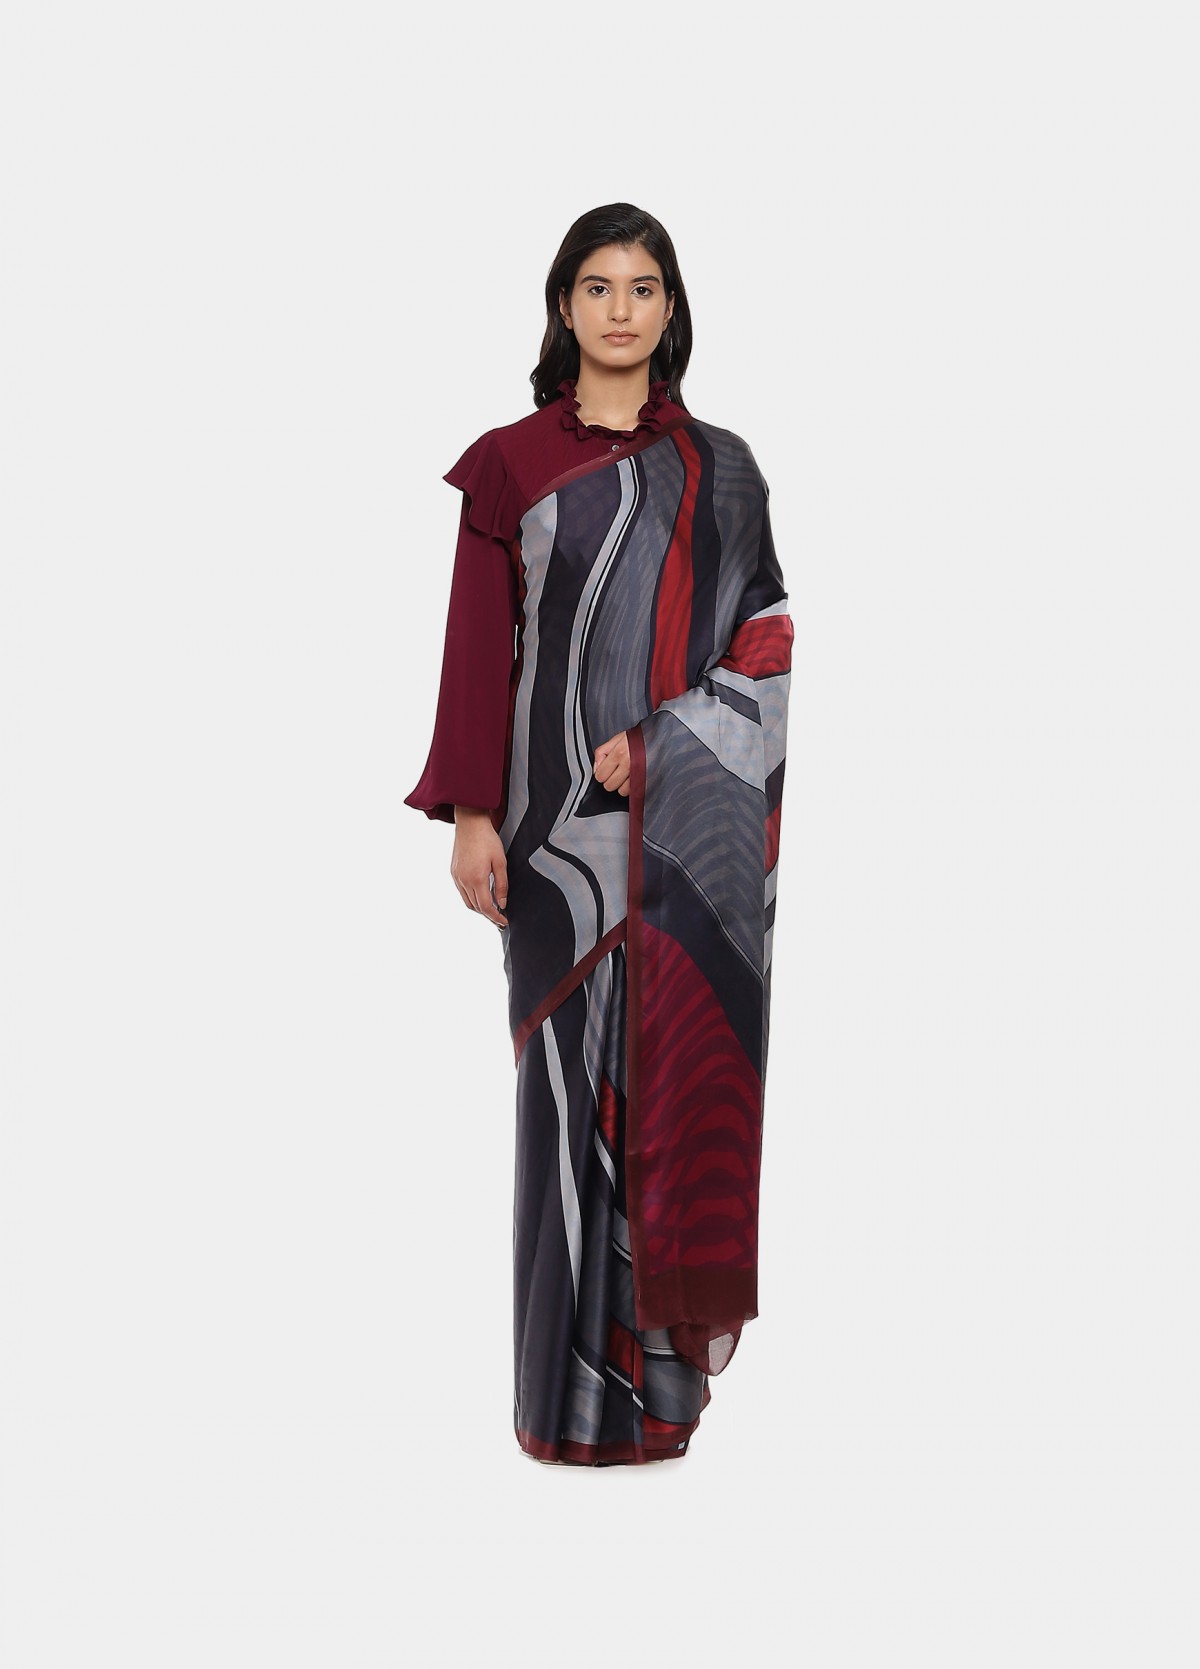 The Far Out Sari